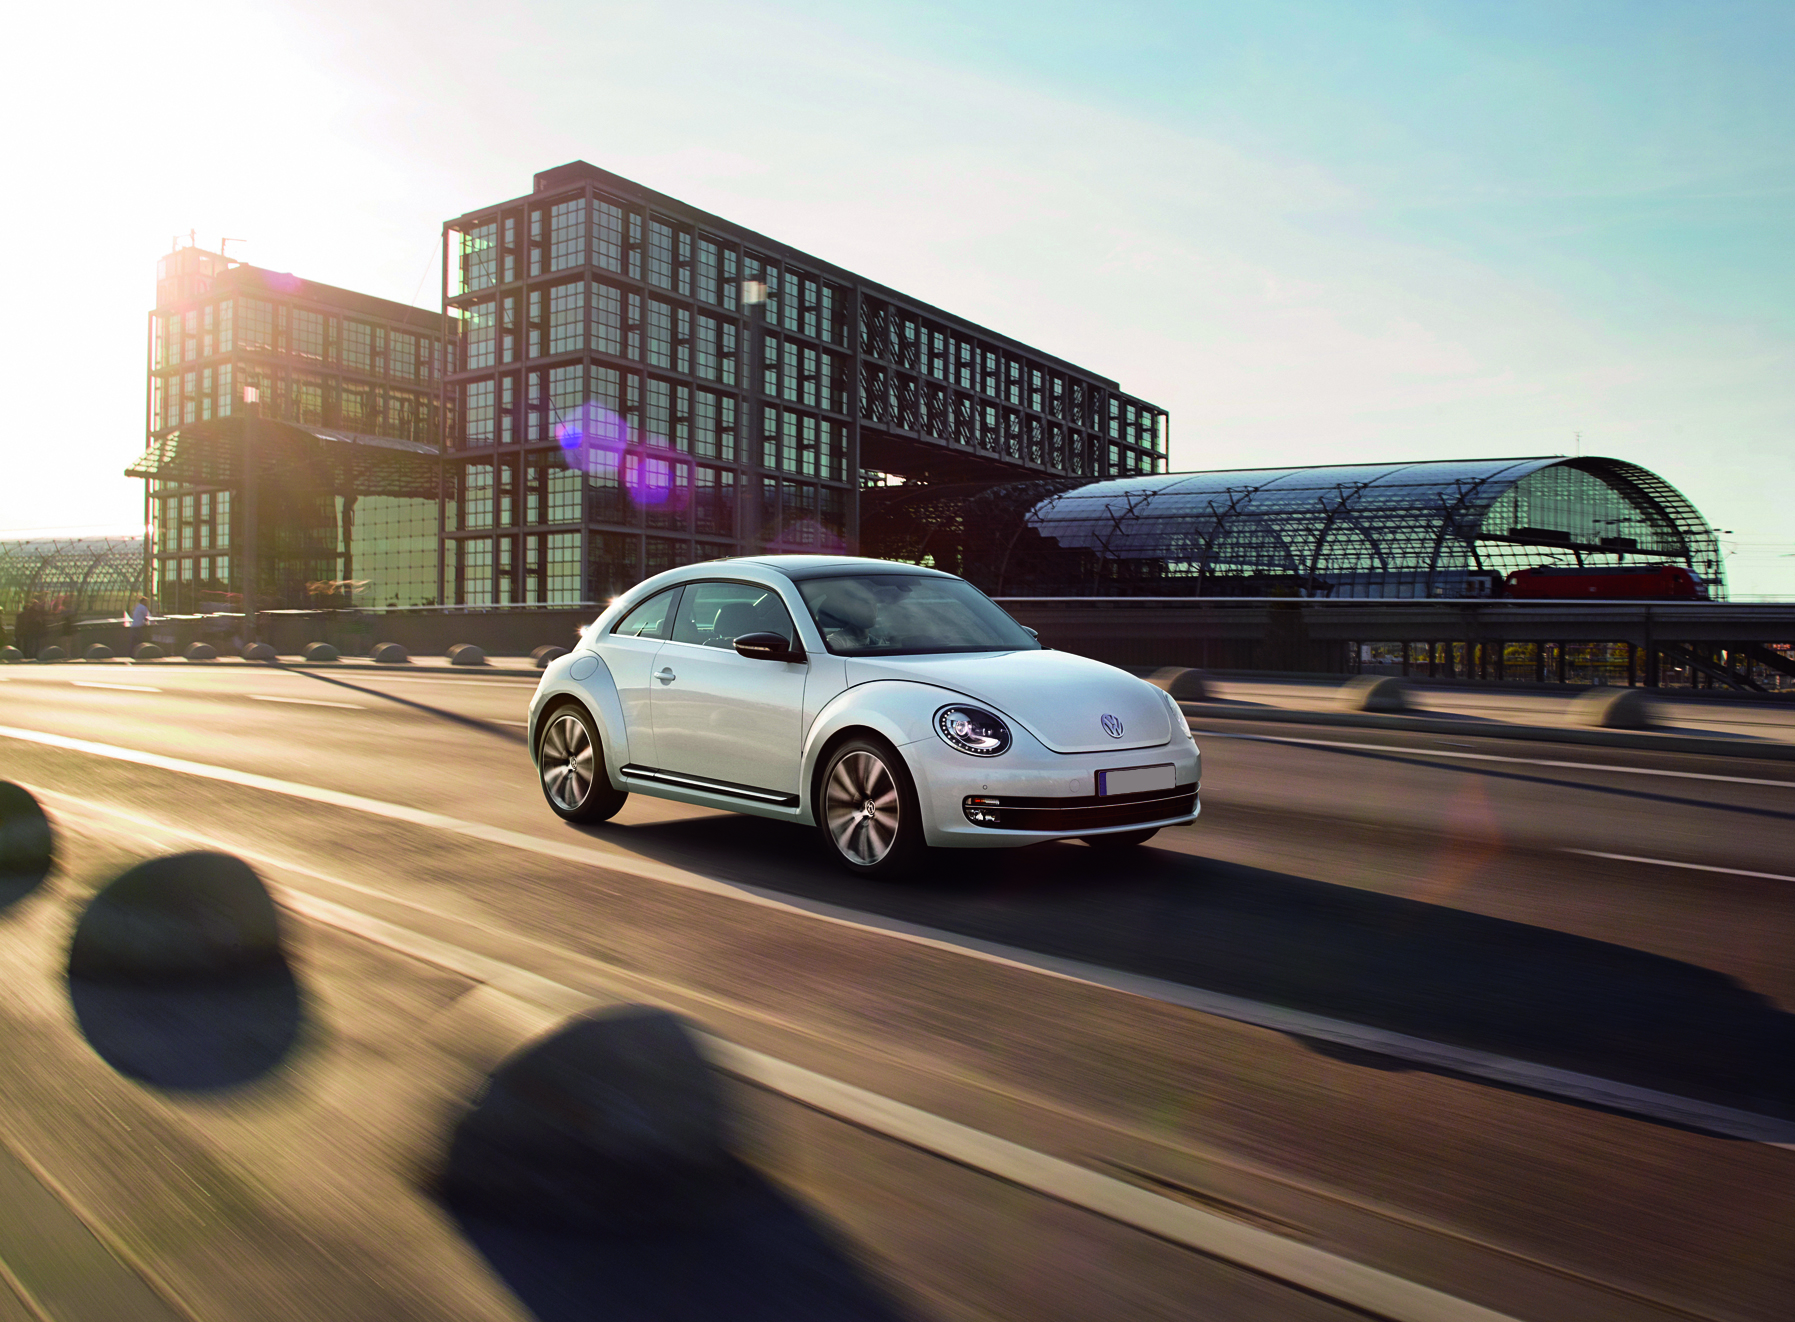 2013 VW Beetle TDI Tested: 45 mpg Observed